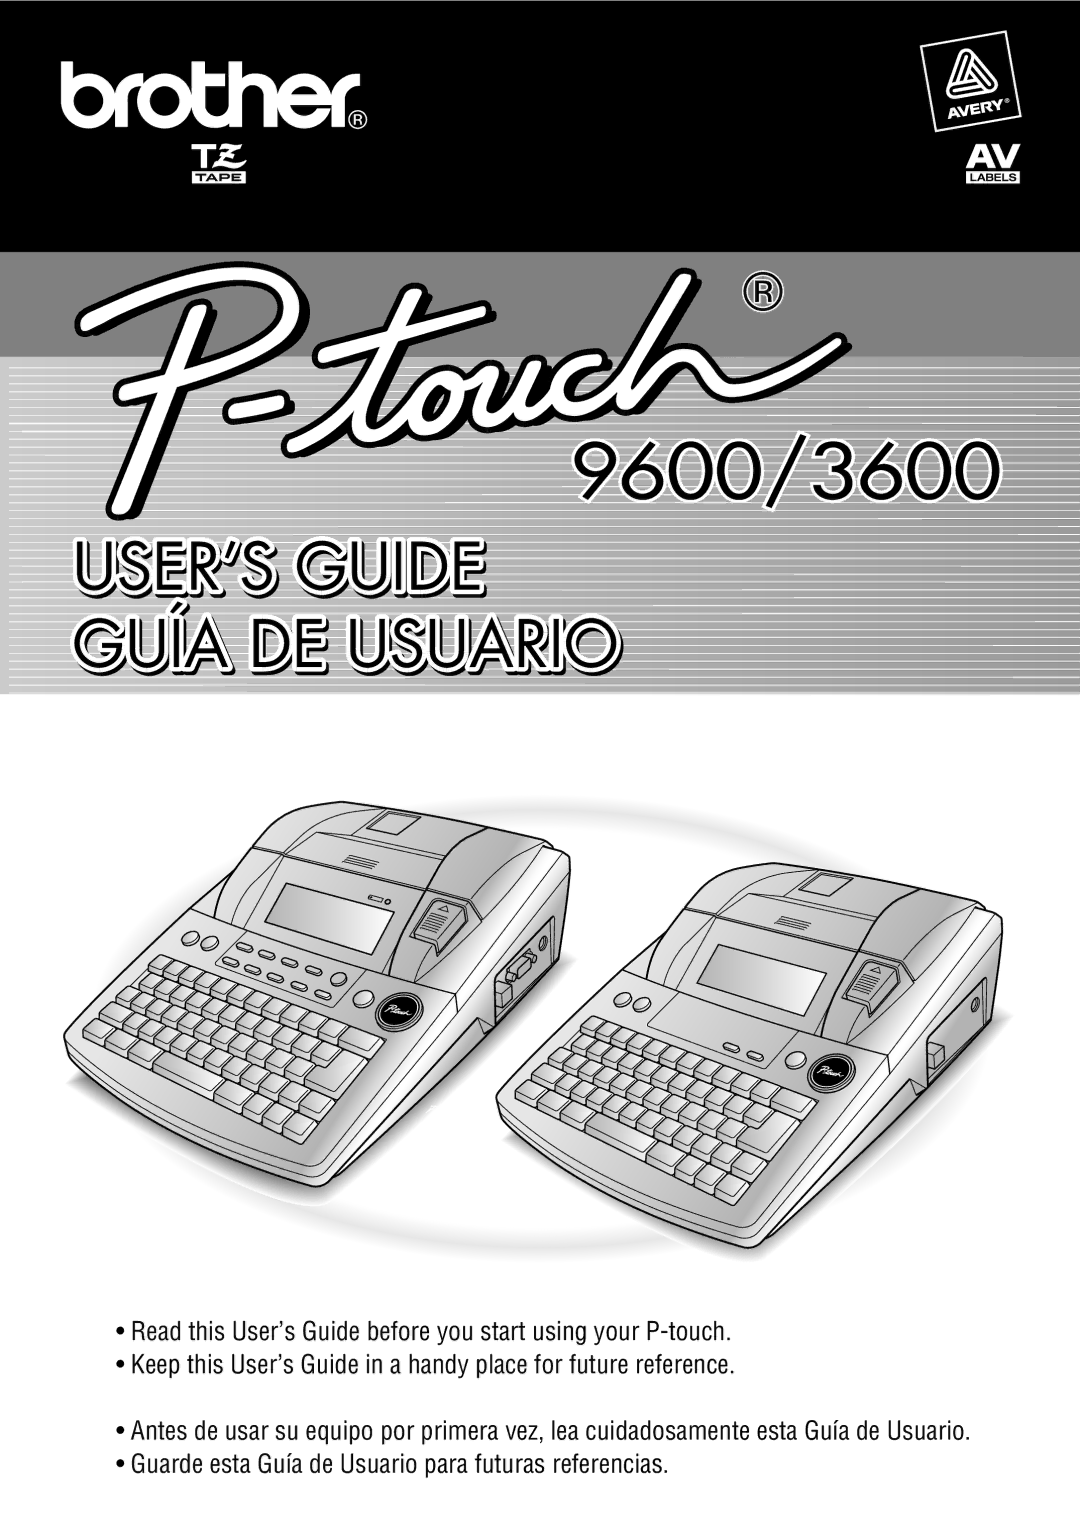 Brother PT-9600, PT-3600 manual 9600/3600 